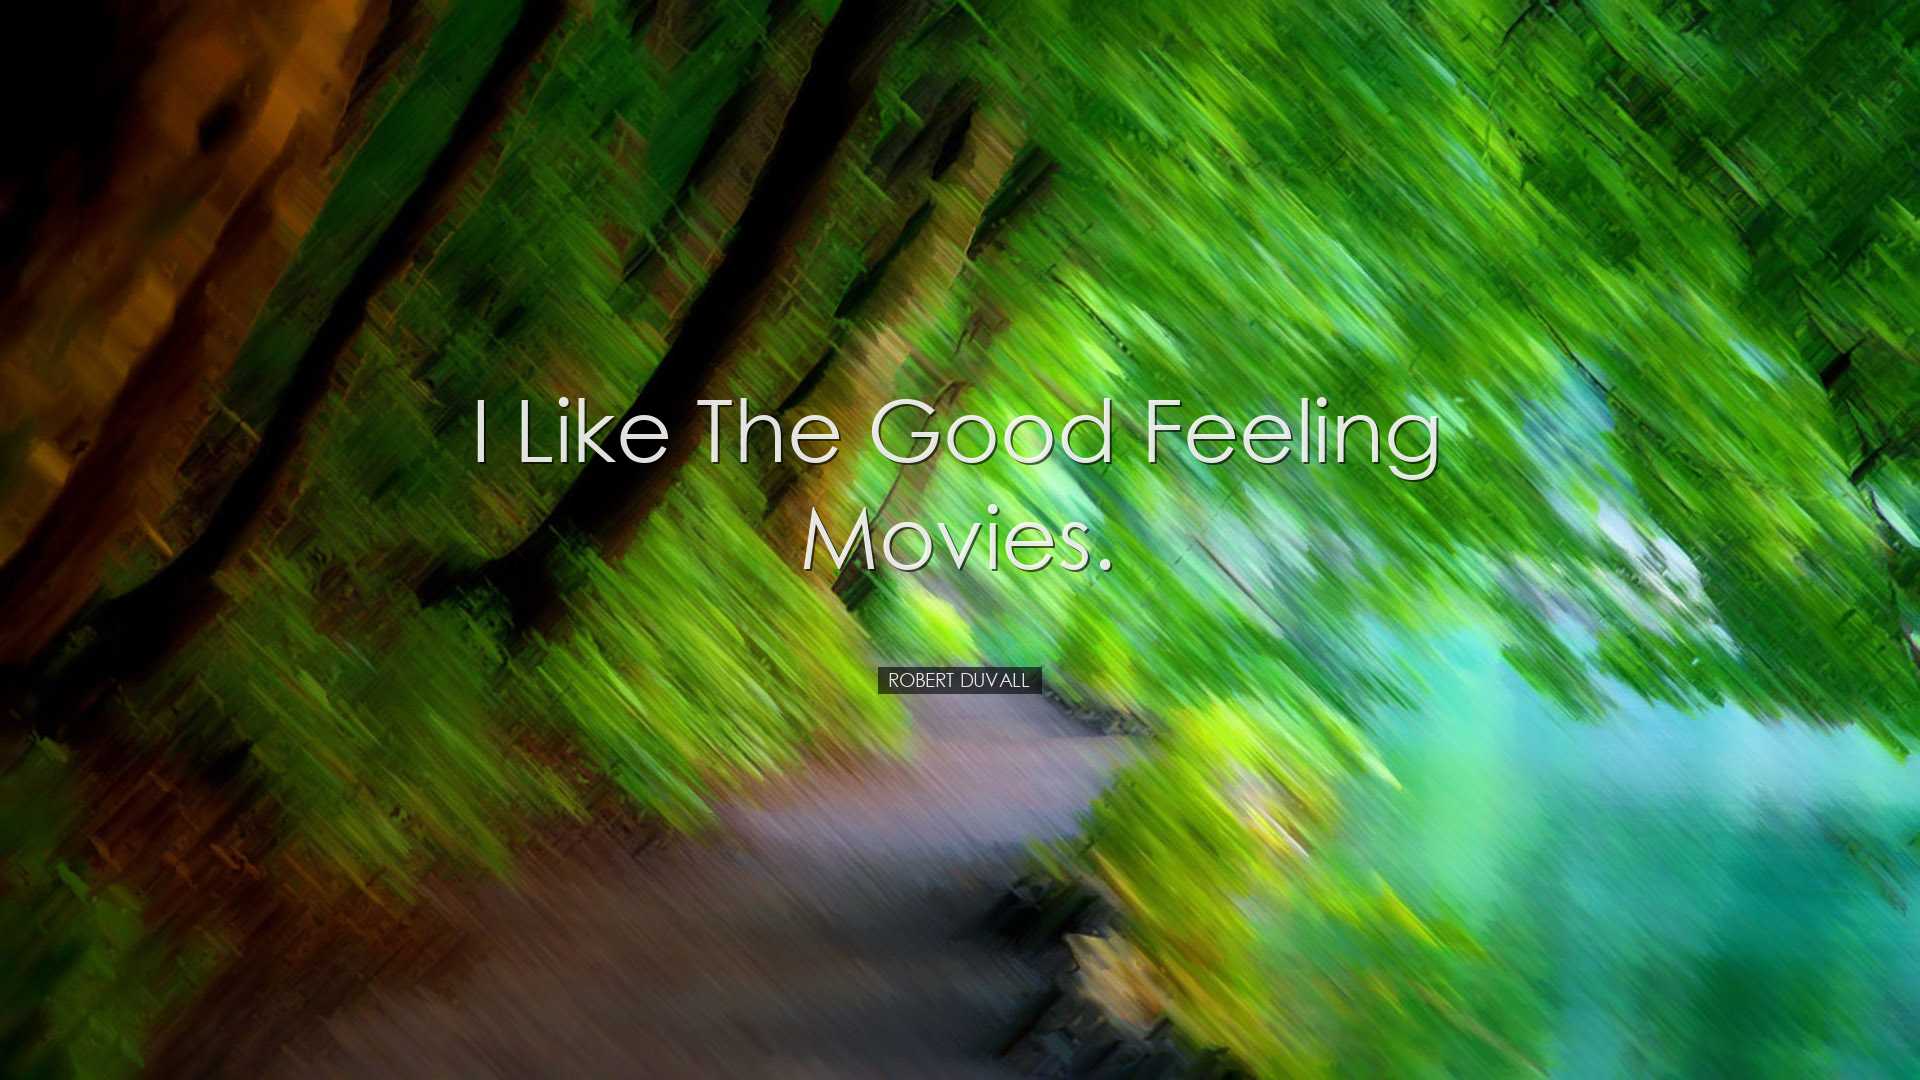 I like the good feeling movies. - Robert Duvall